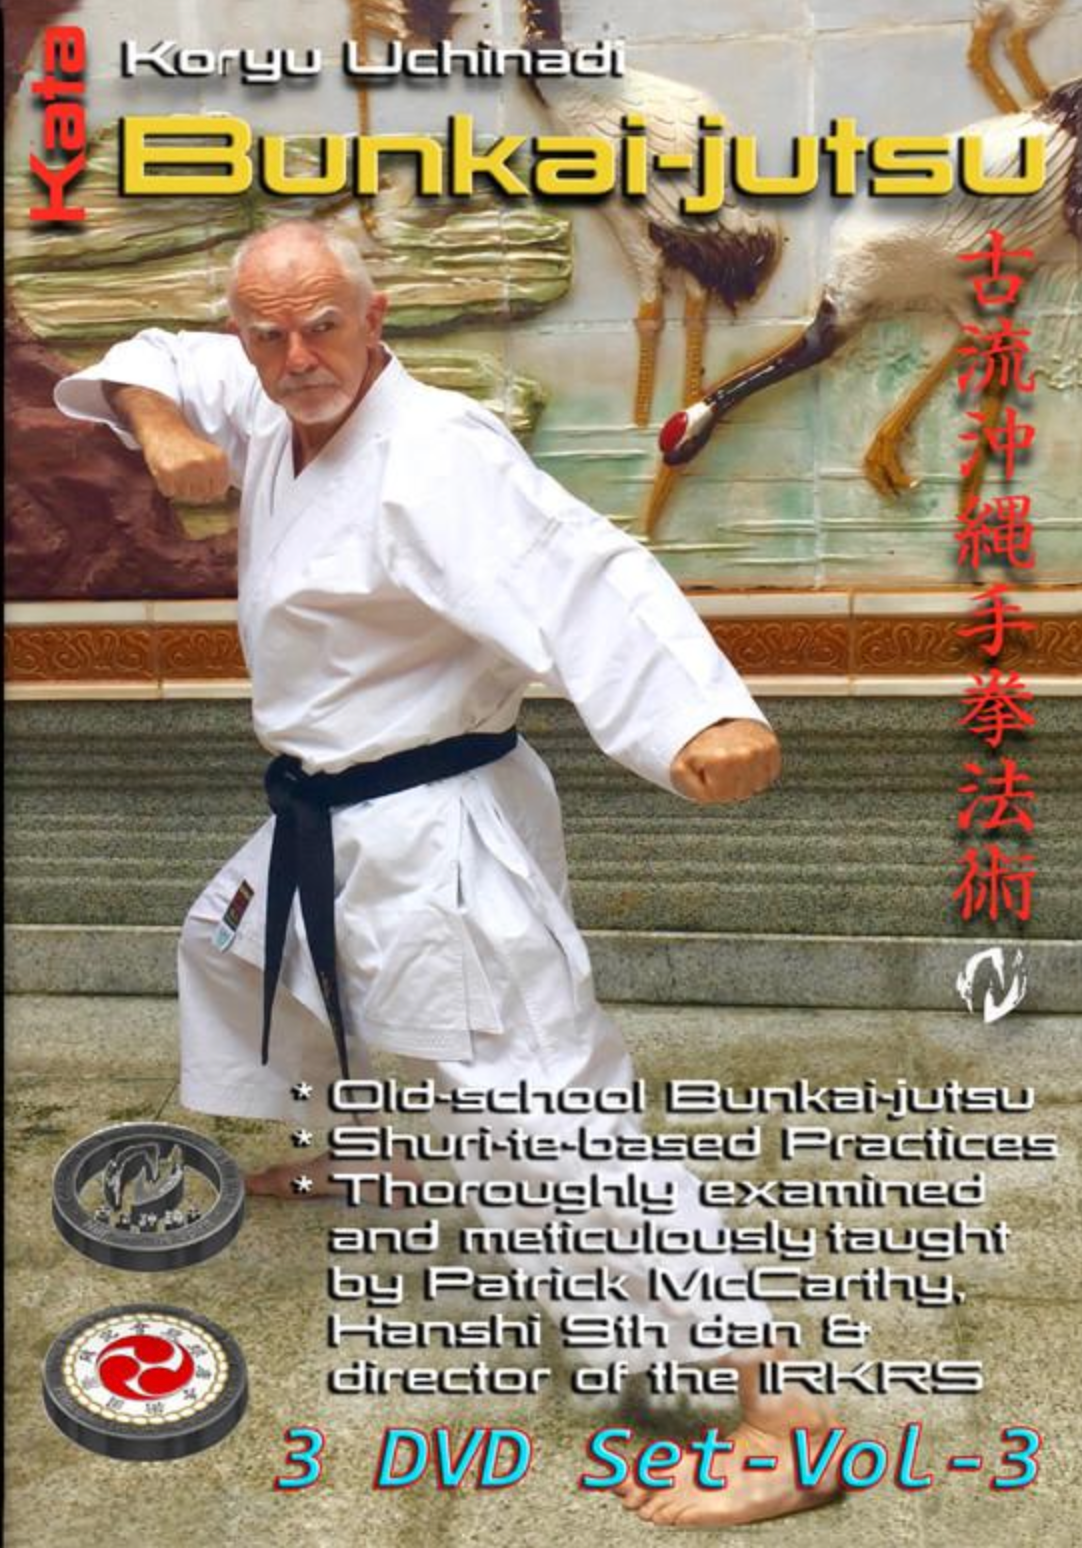 Koryu Uchinadi Vol 3: Bunkai-jutsu (3 DVD Set) By Patrick McCarthy - Budovideos Inc